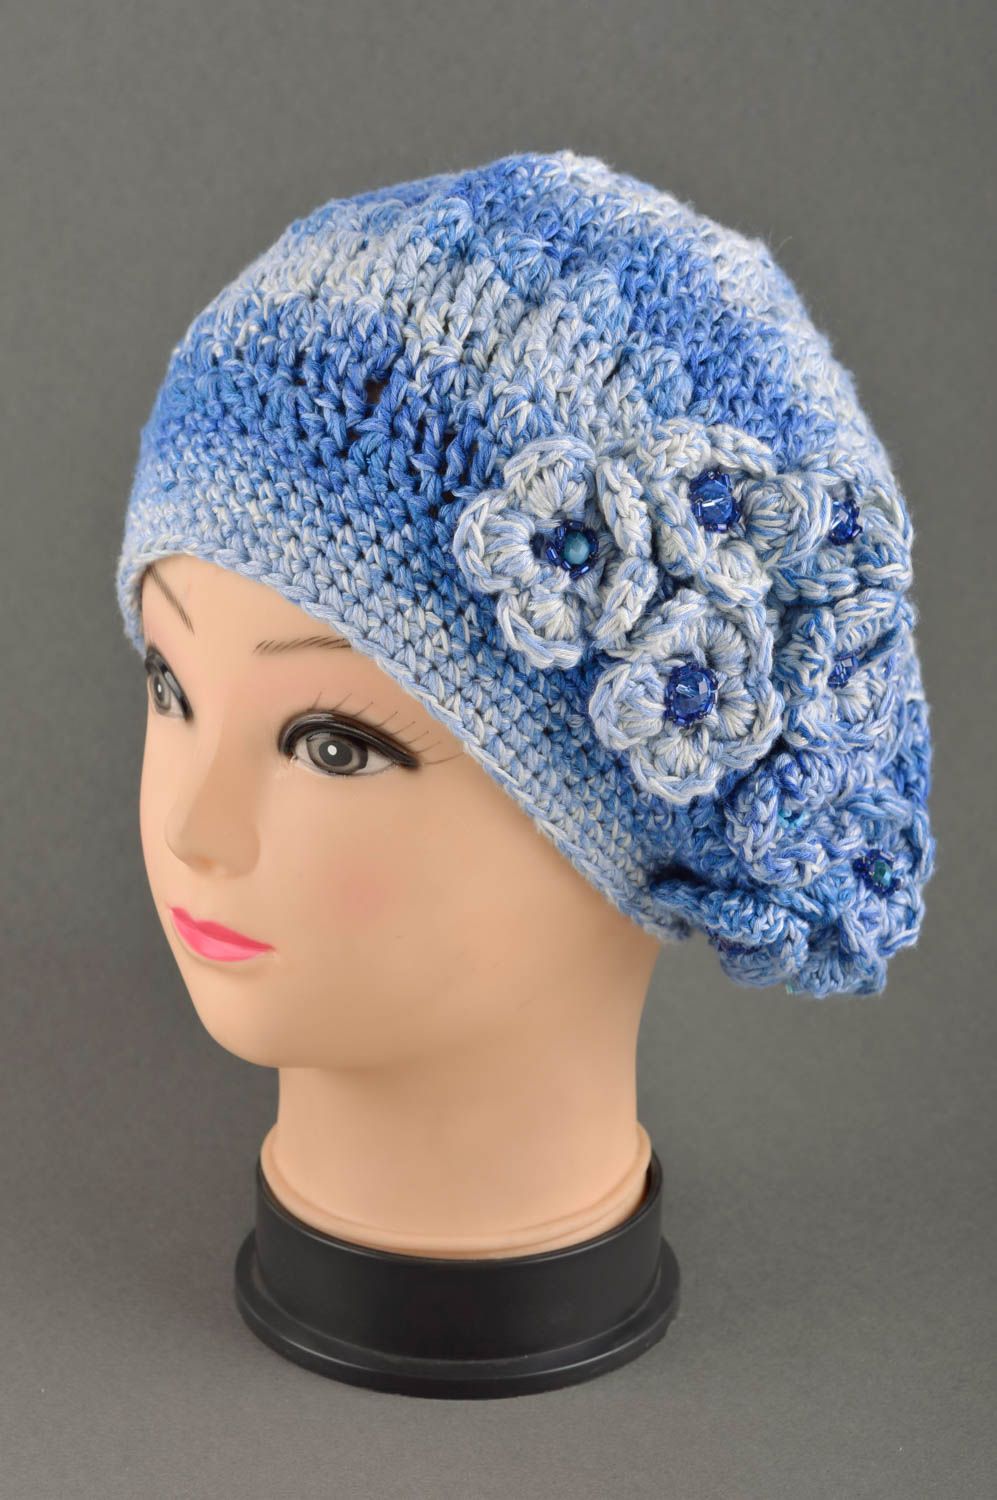 Handmade crochet hat designer accessories hats for women warm hat gifts for girl photo 1